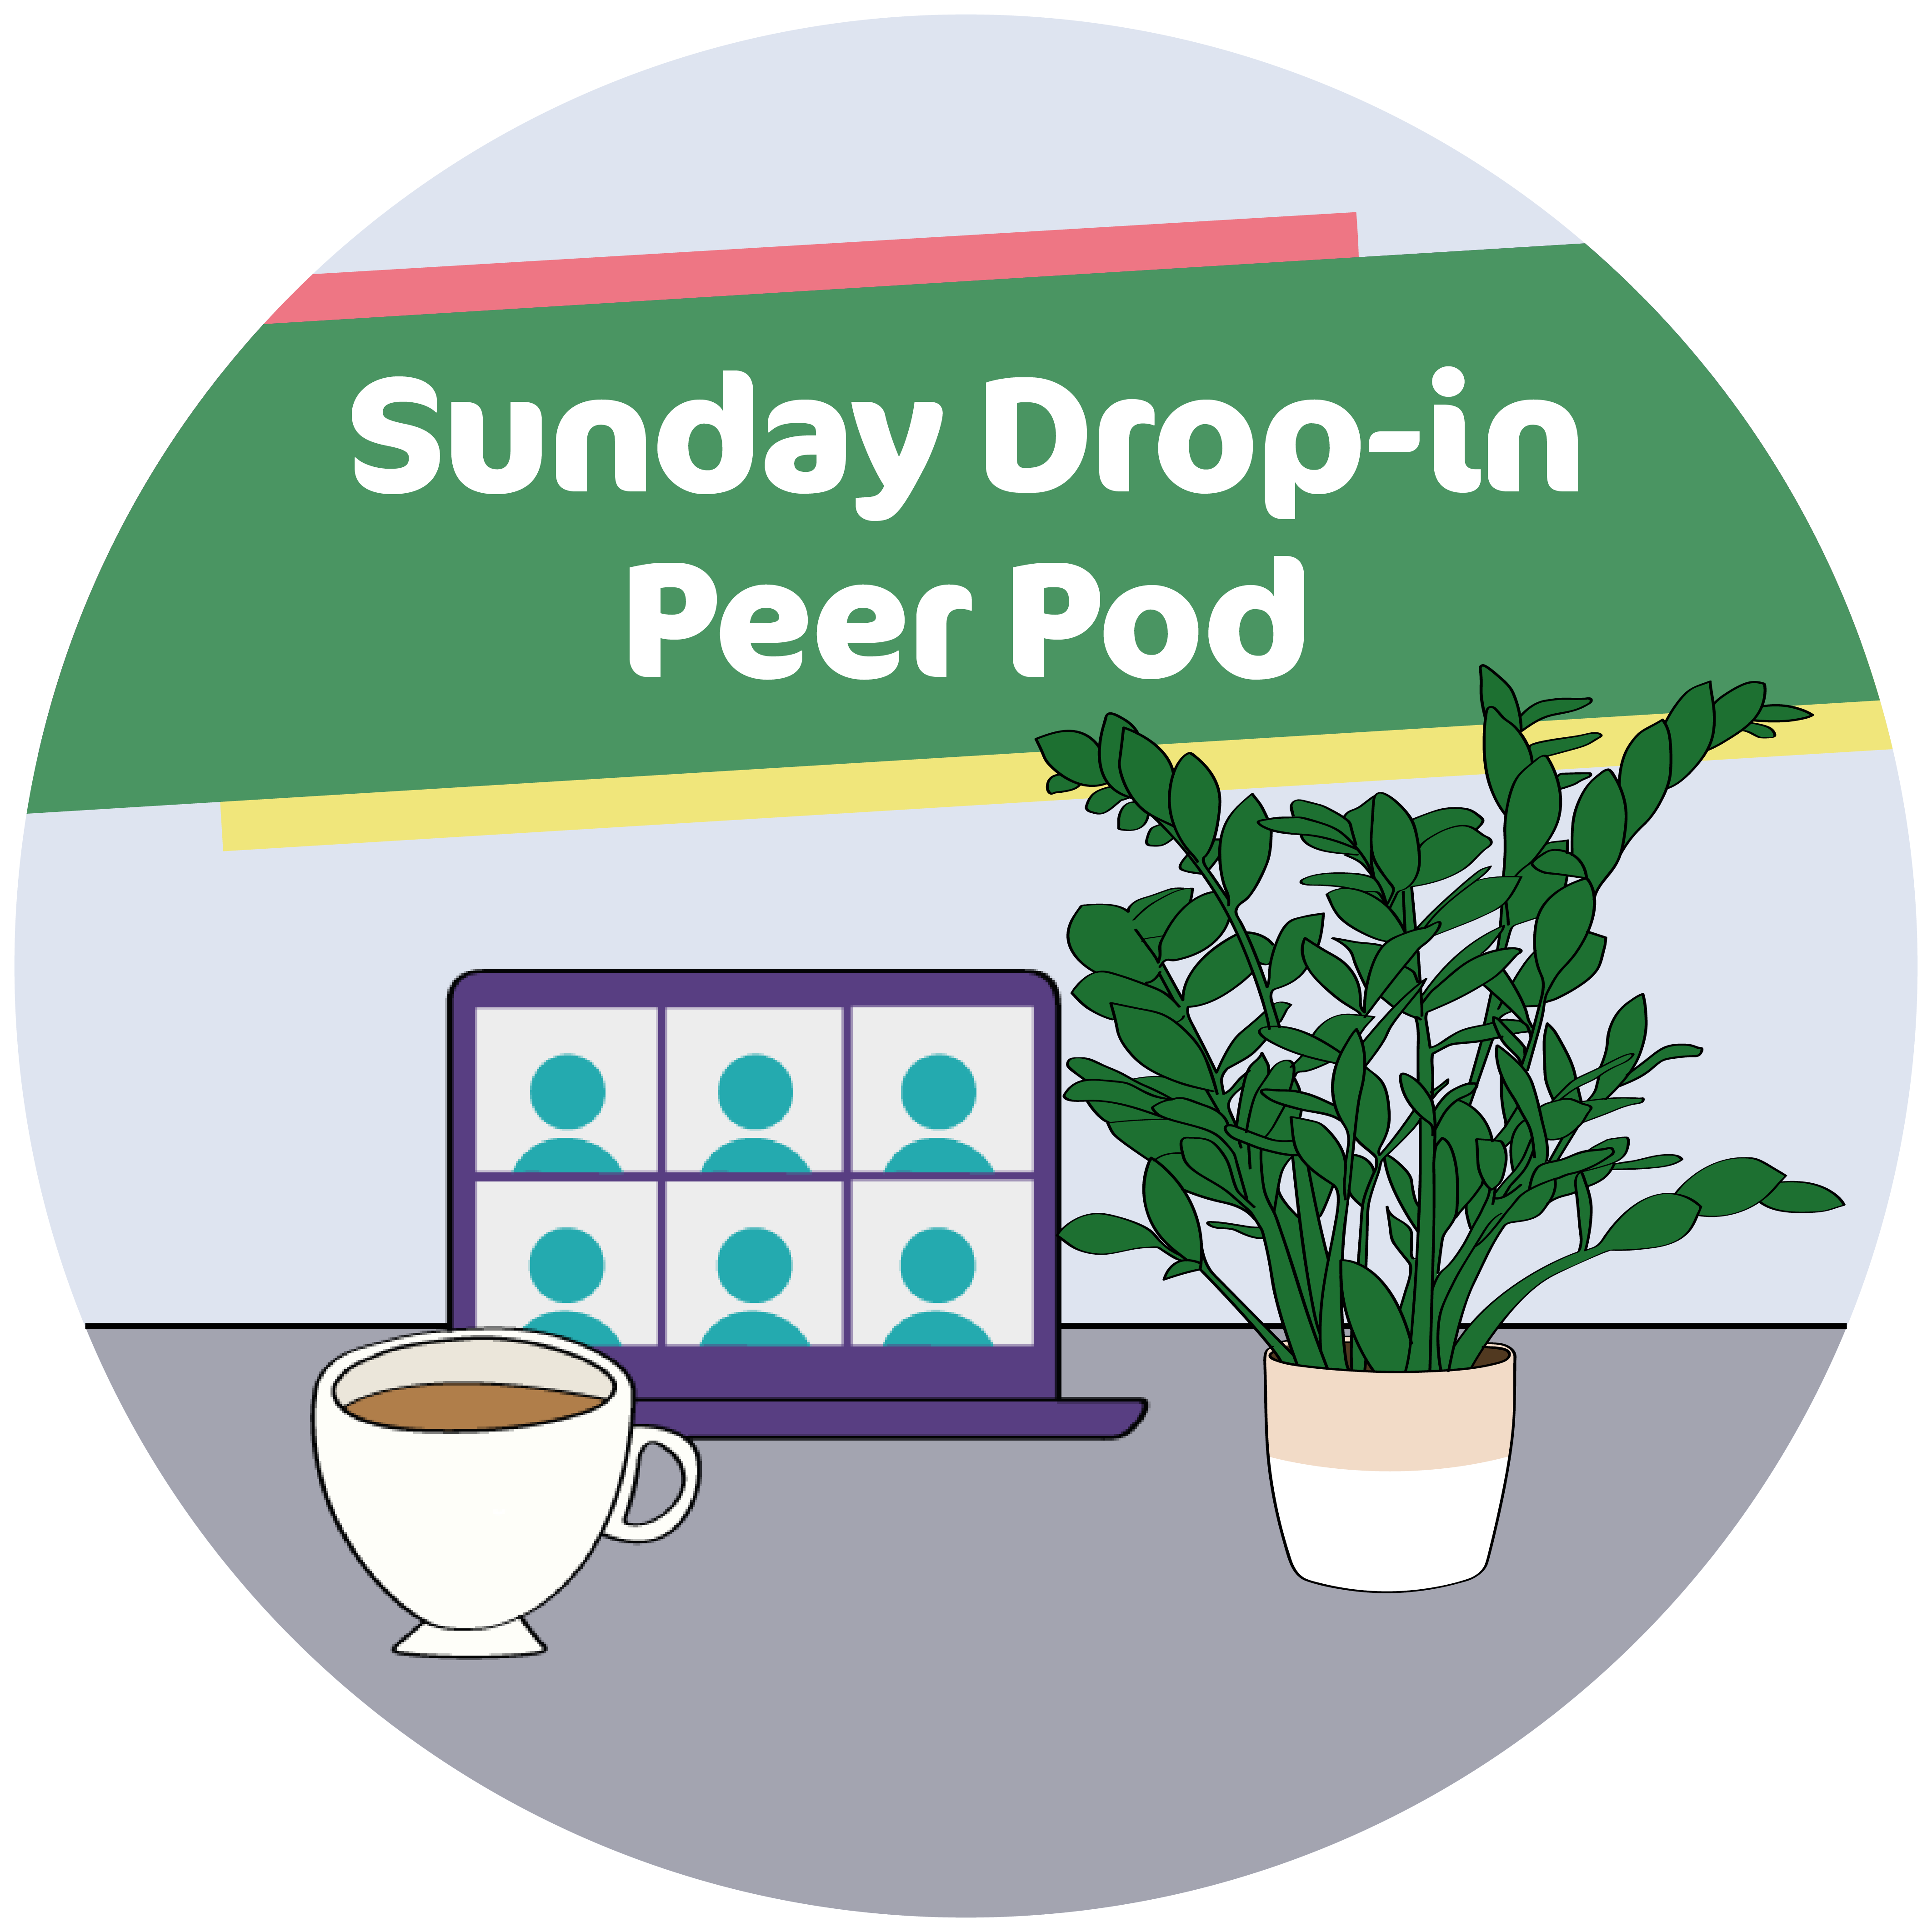 Sunday Drop-in Peer pod